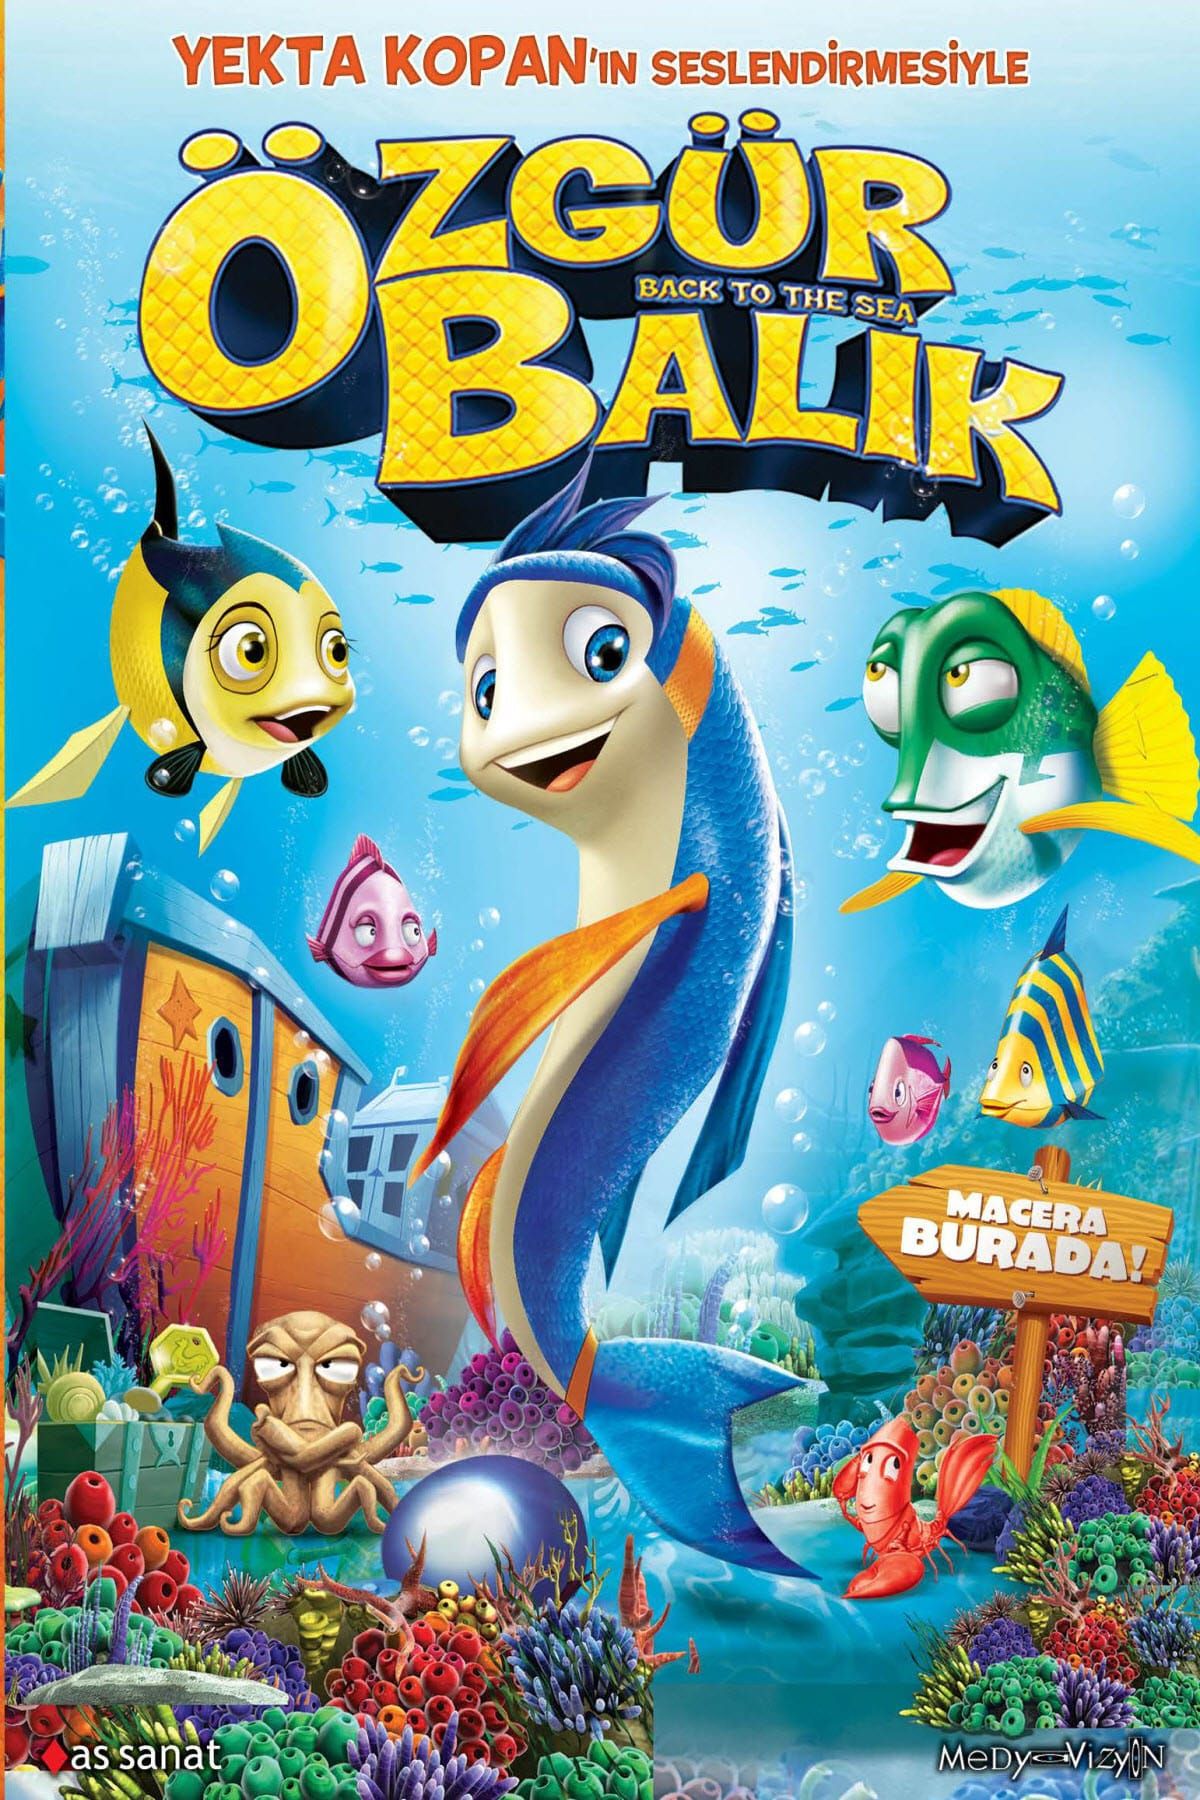 Pal DVD-Özgür Balık / Back To the sea